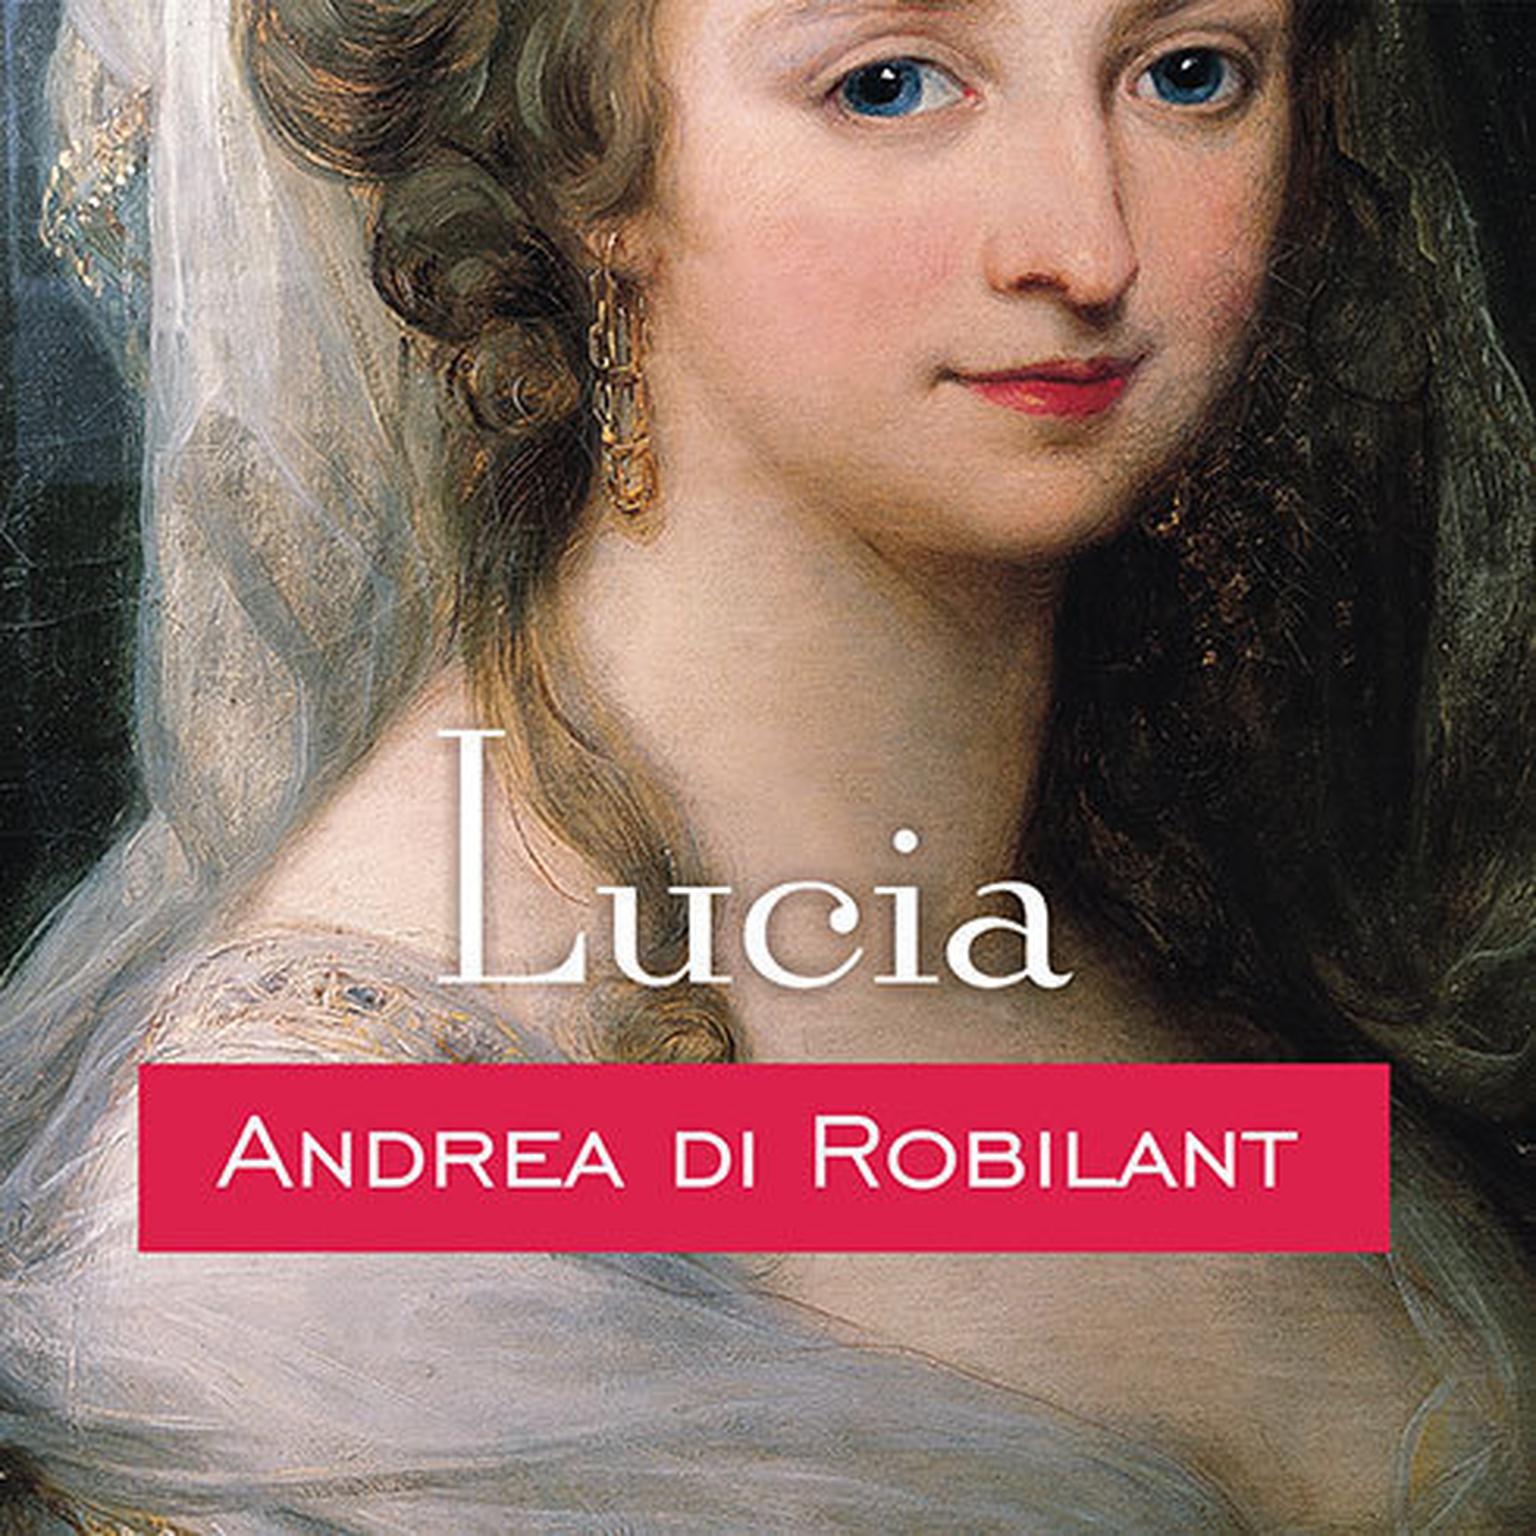 Lucia: A Venetian Life in the Age of Napoleon Audiobook, by Andrea di Robilant